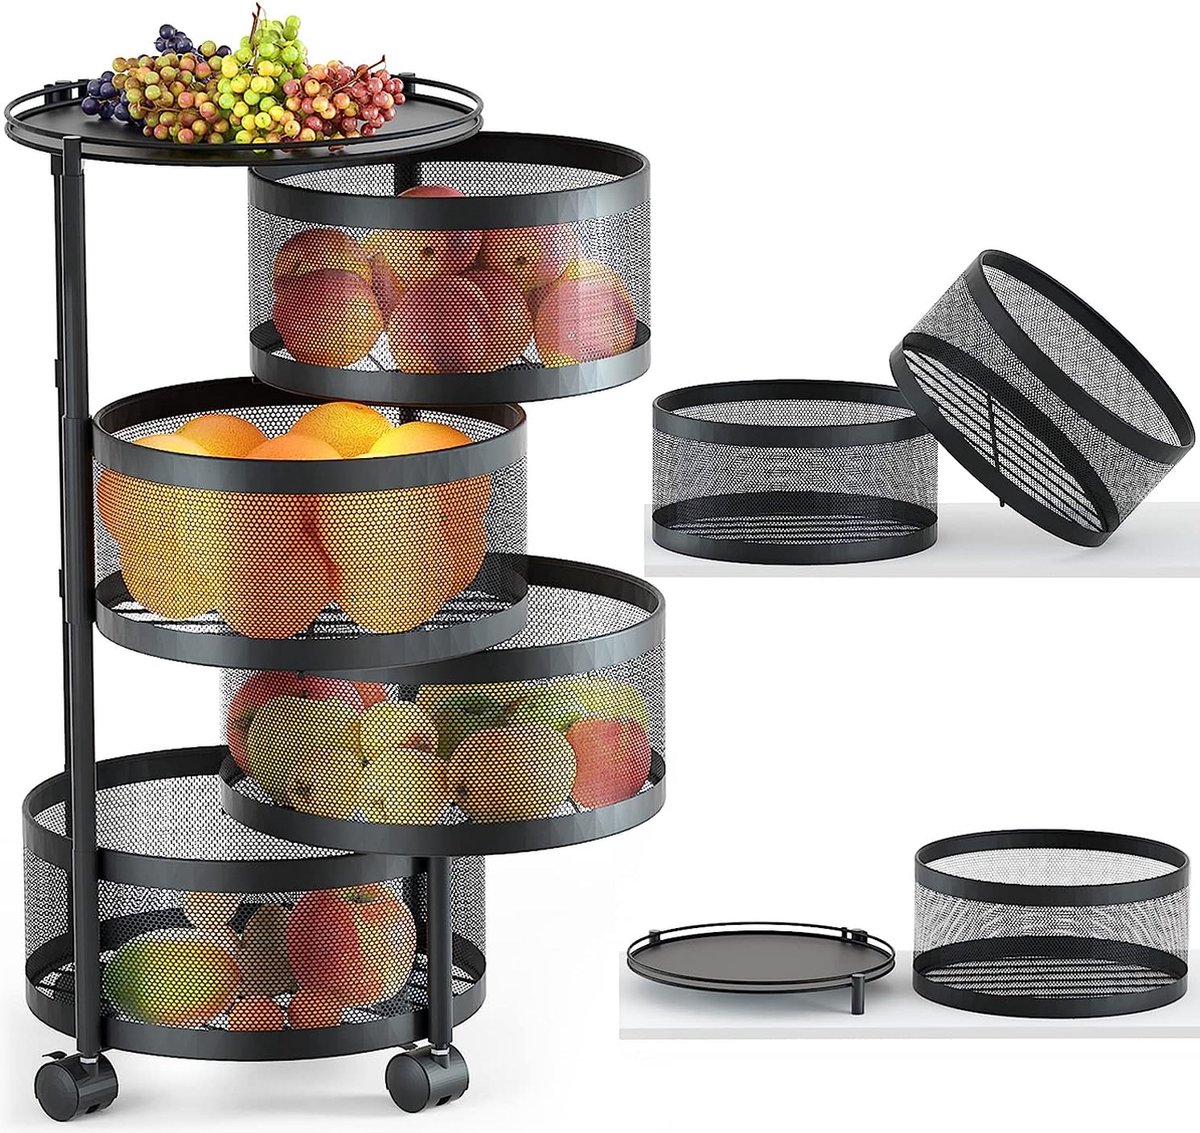 Roterend opbergrek voor keuken, 4-laags fruit- en groenteopslag voor keuken, roterend opbergrek met wielen, keukenopbergwagen, ruimtebesparend, aardappelopslag, fruitmand, zwart